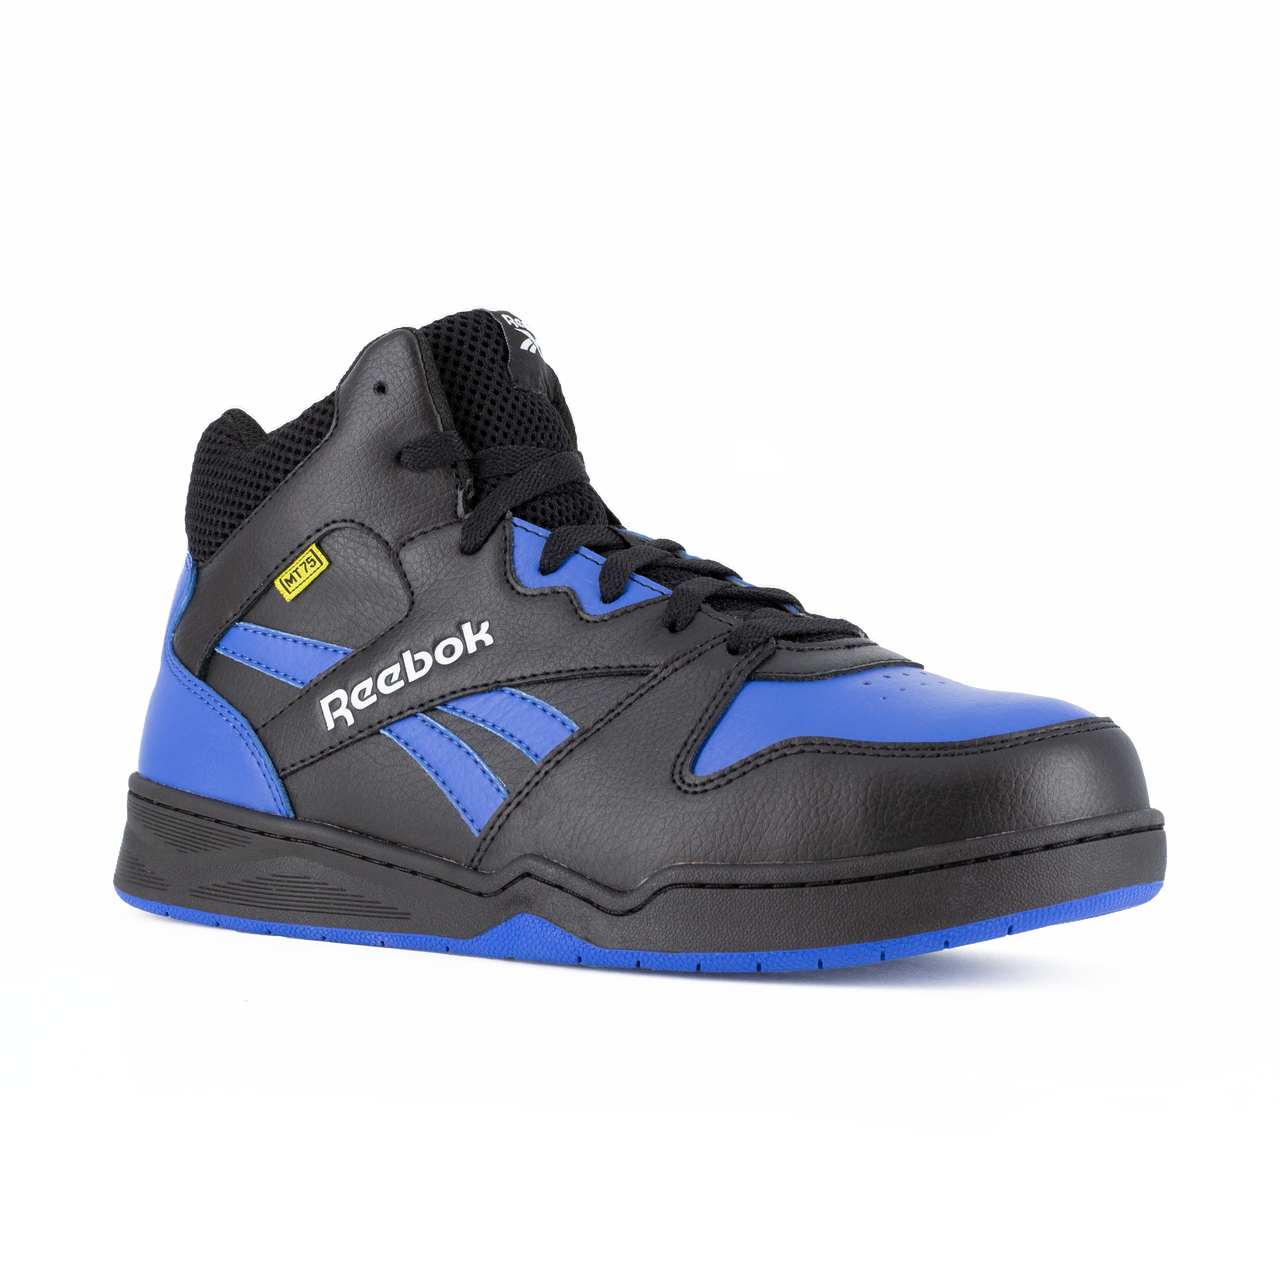 Reebok Men's Royal BB4500 Hi Top Sneaker - Wh